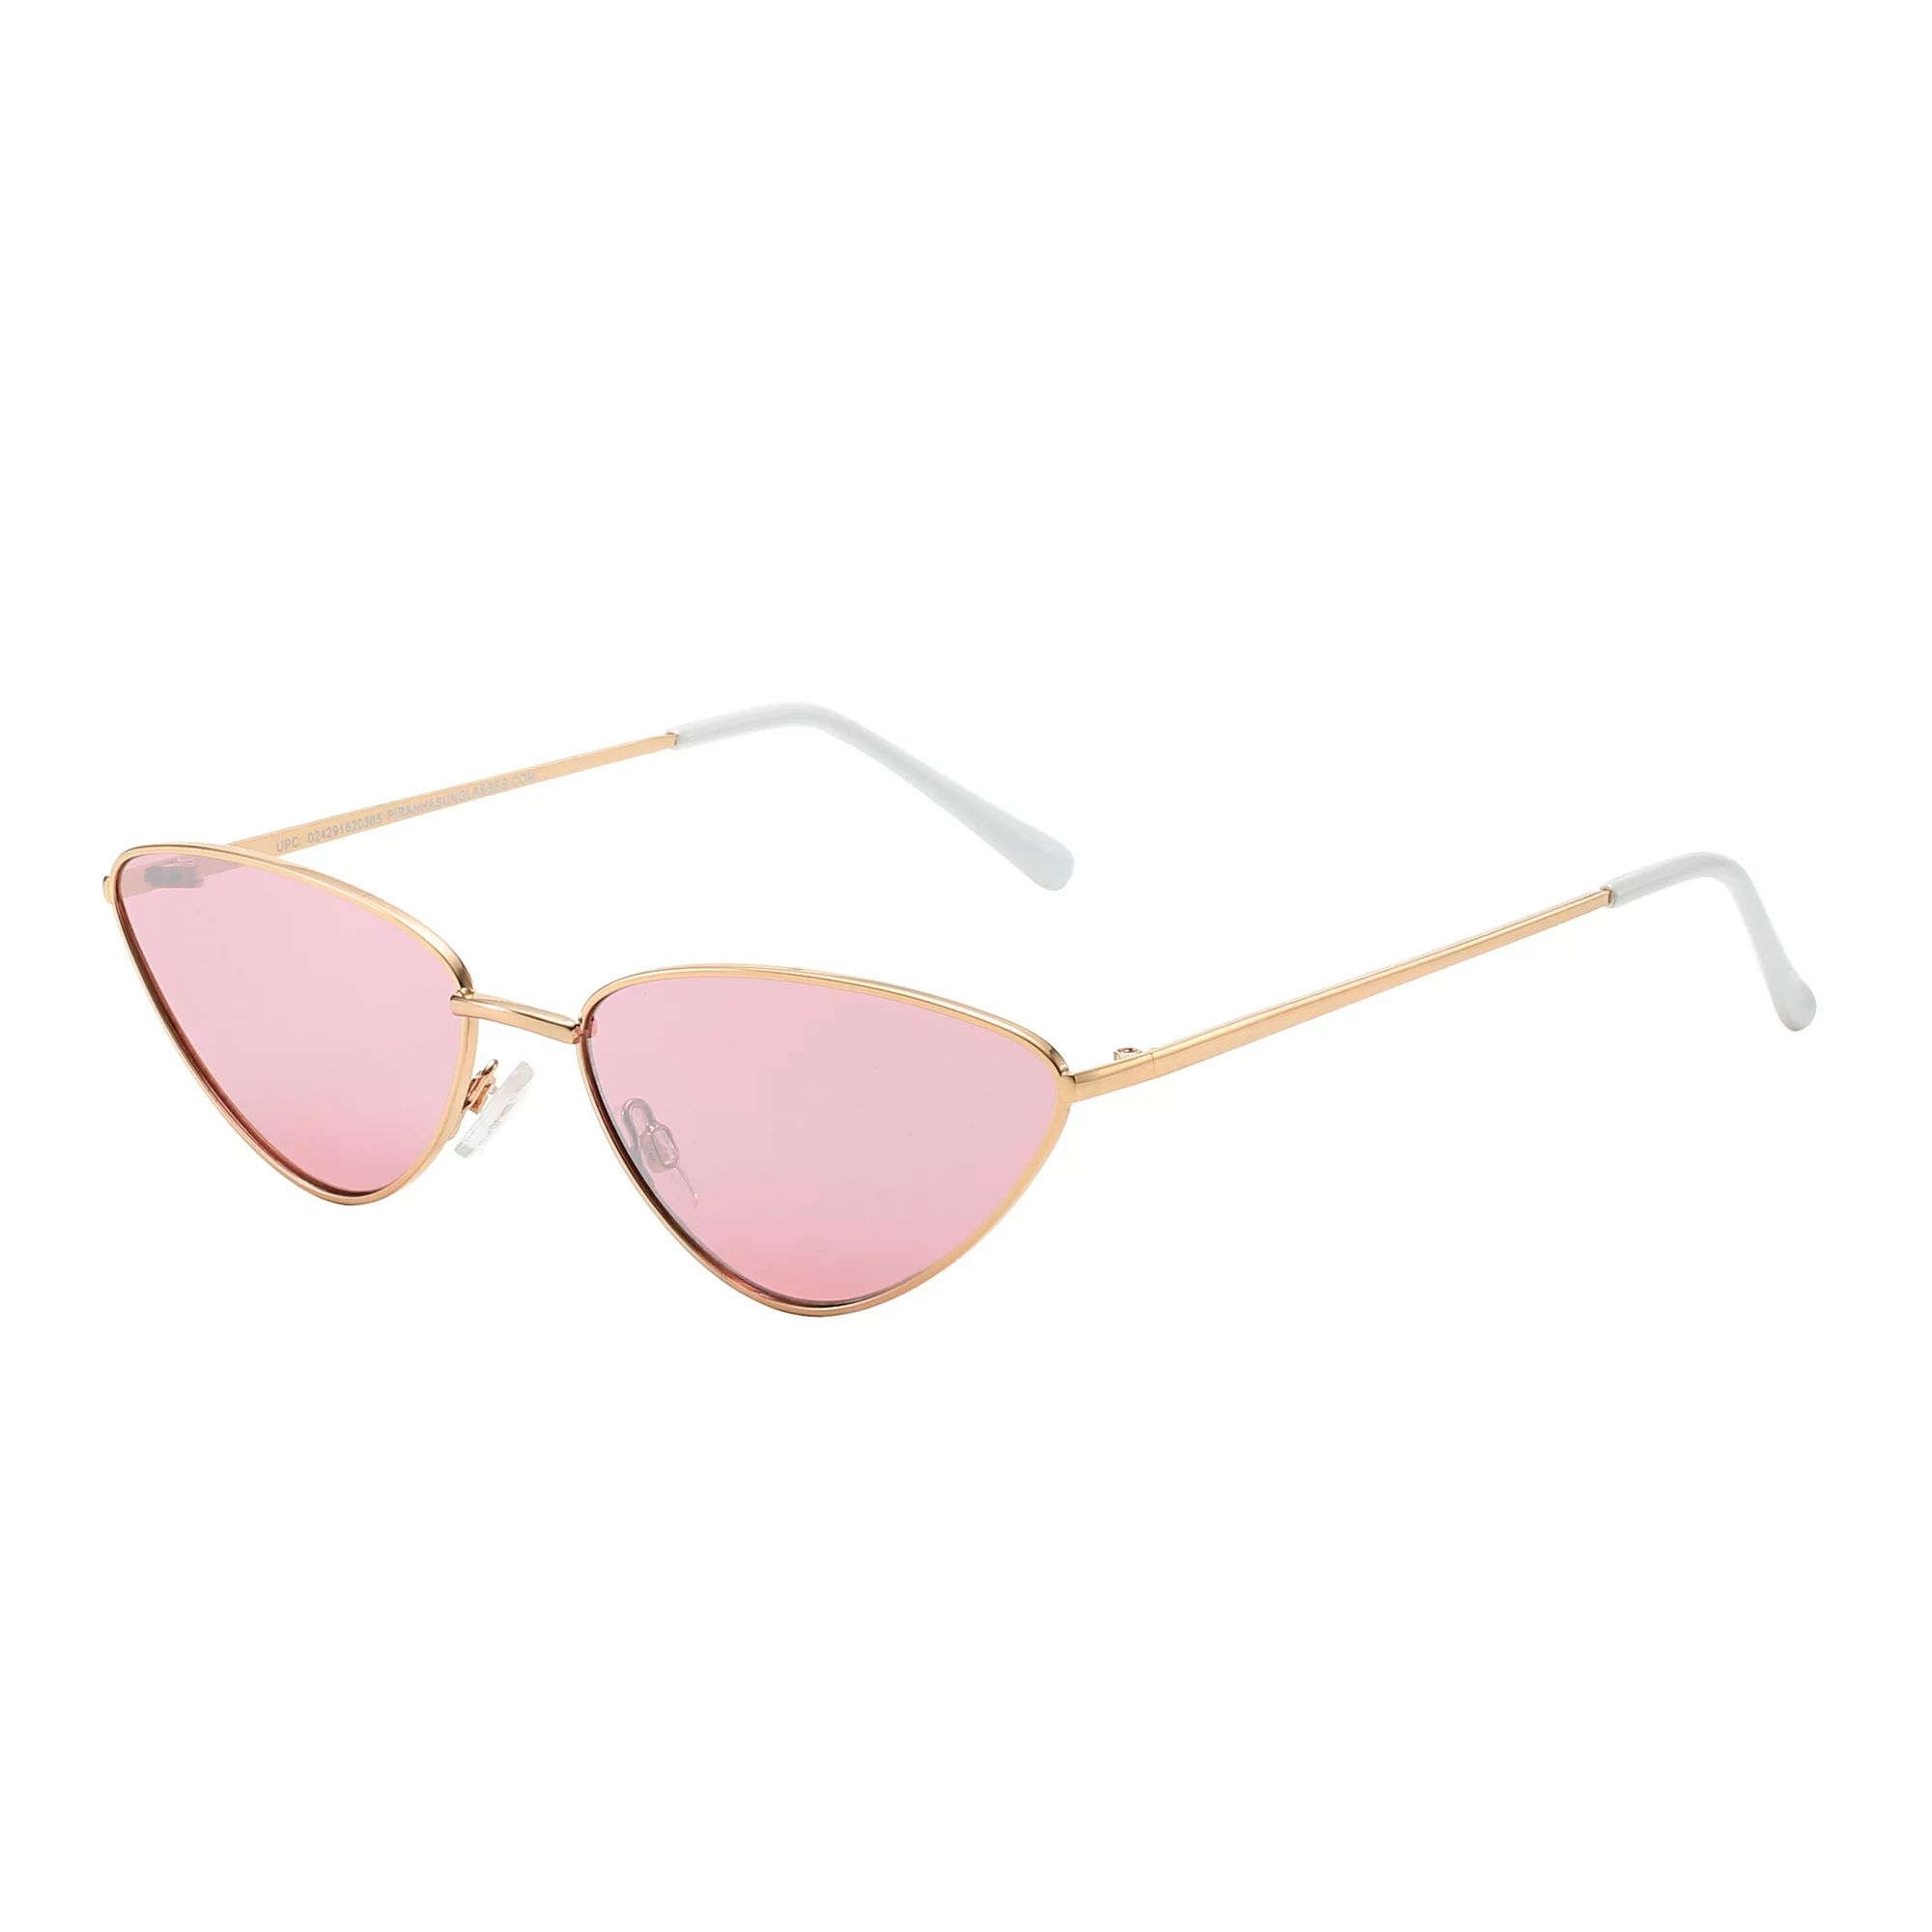 Piranha Women's "Riviera" Gold Frame Cat Eye Retro Sunglasses with Rose Pink Lens | Walmart (US)